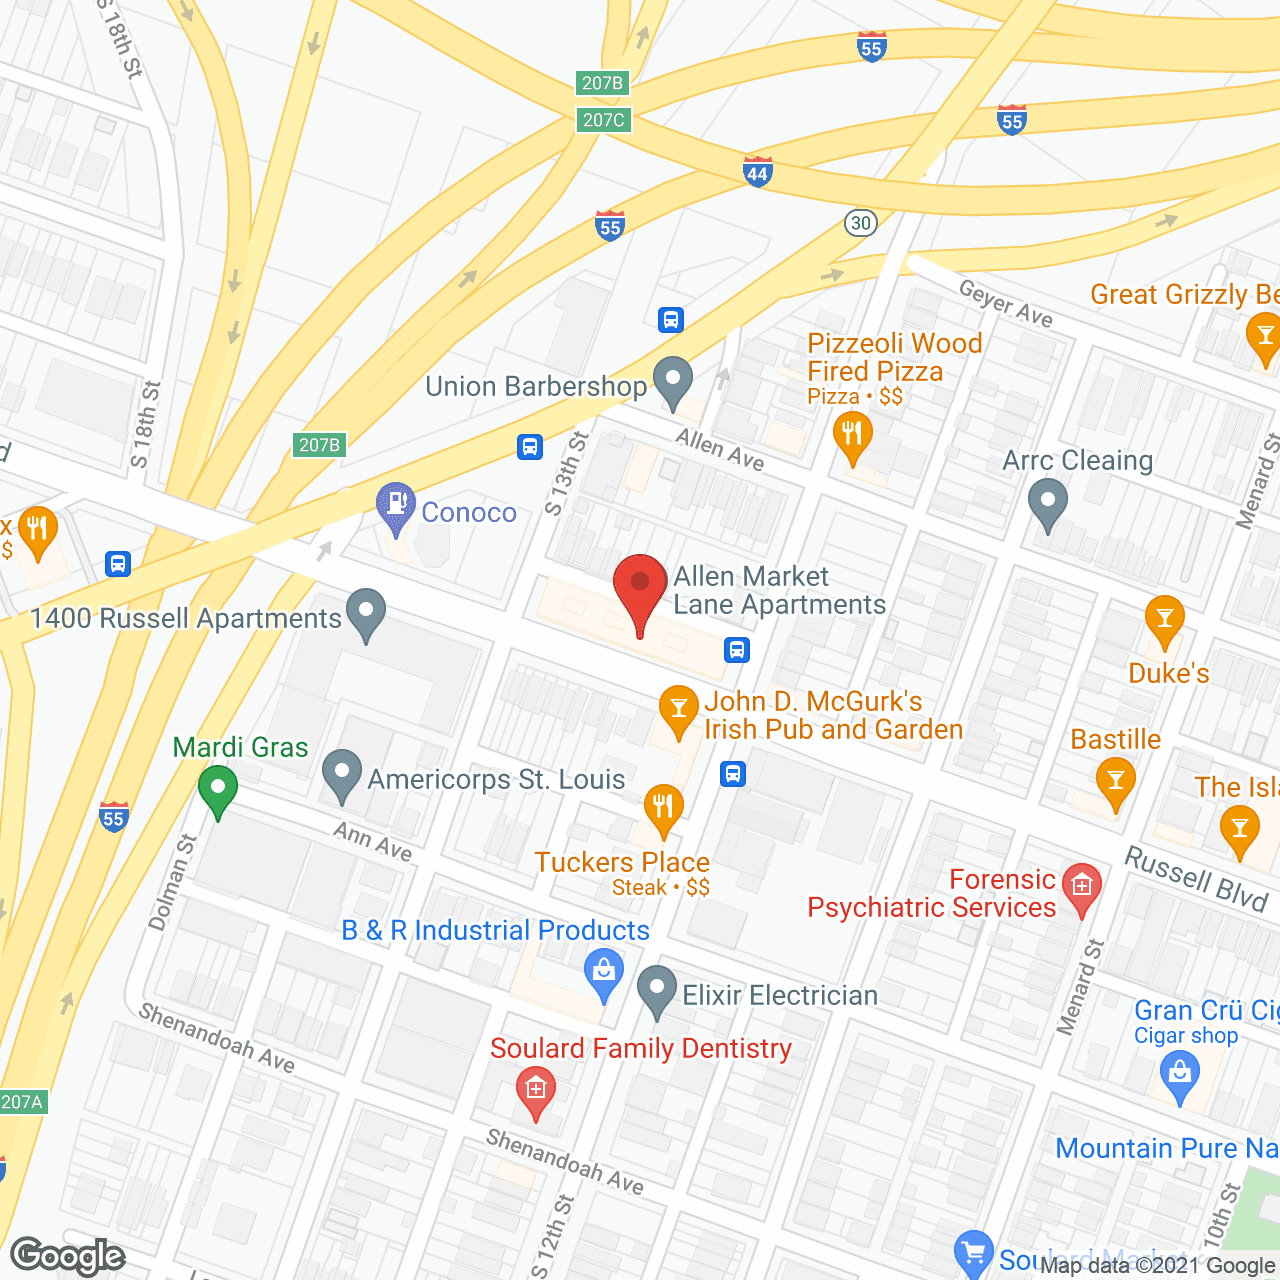 Allen Market Lane in google map